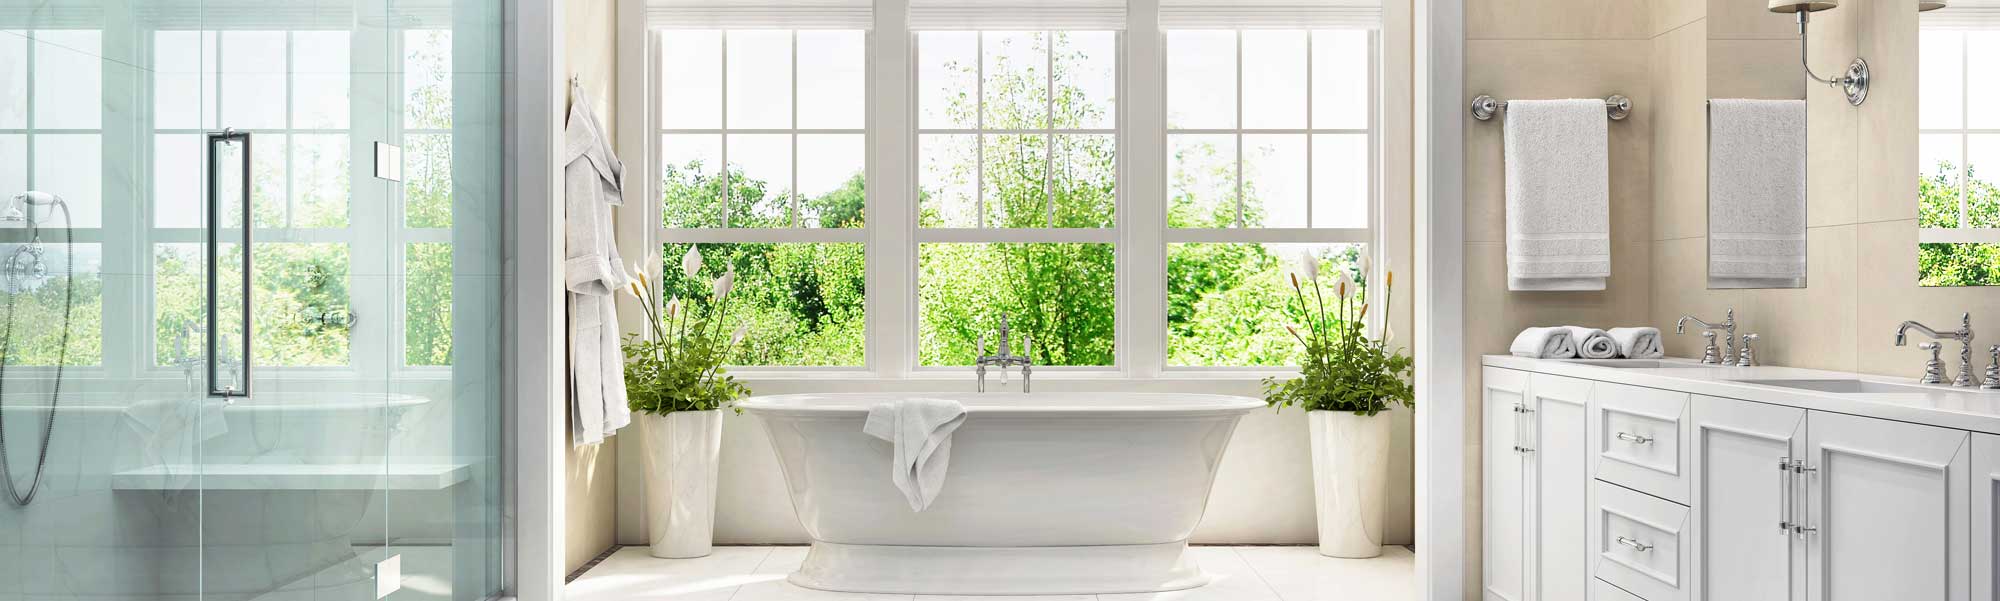 blog-bath-renovation-trends